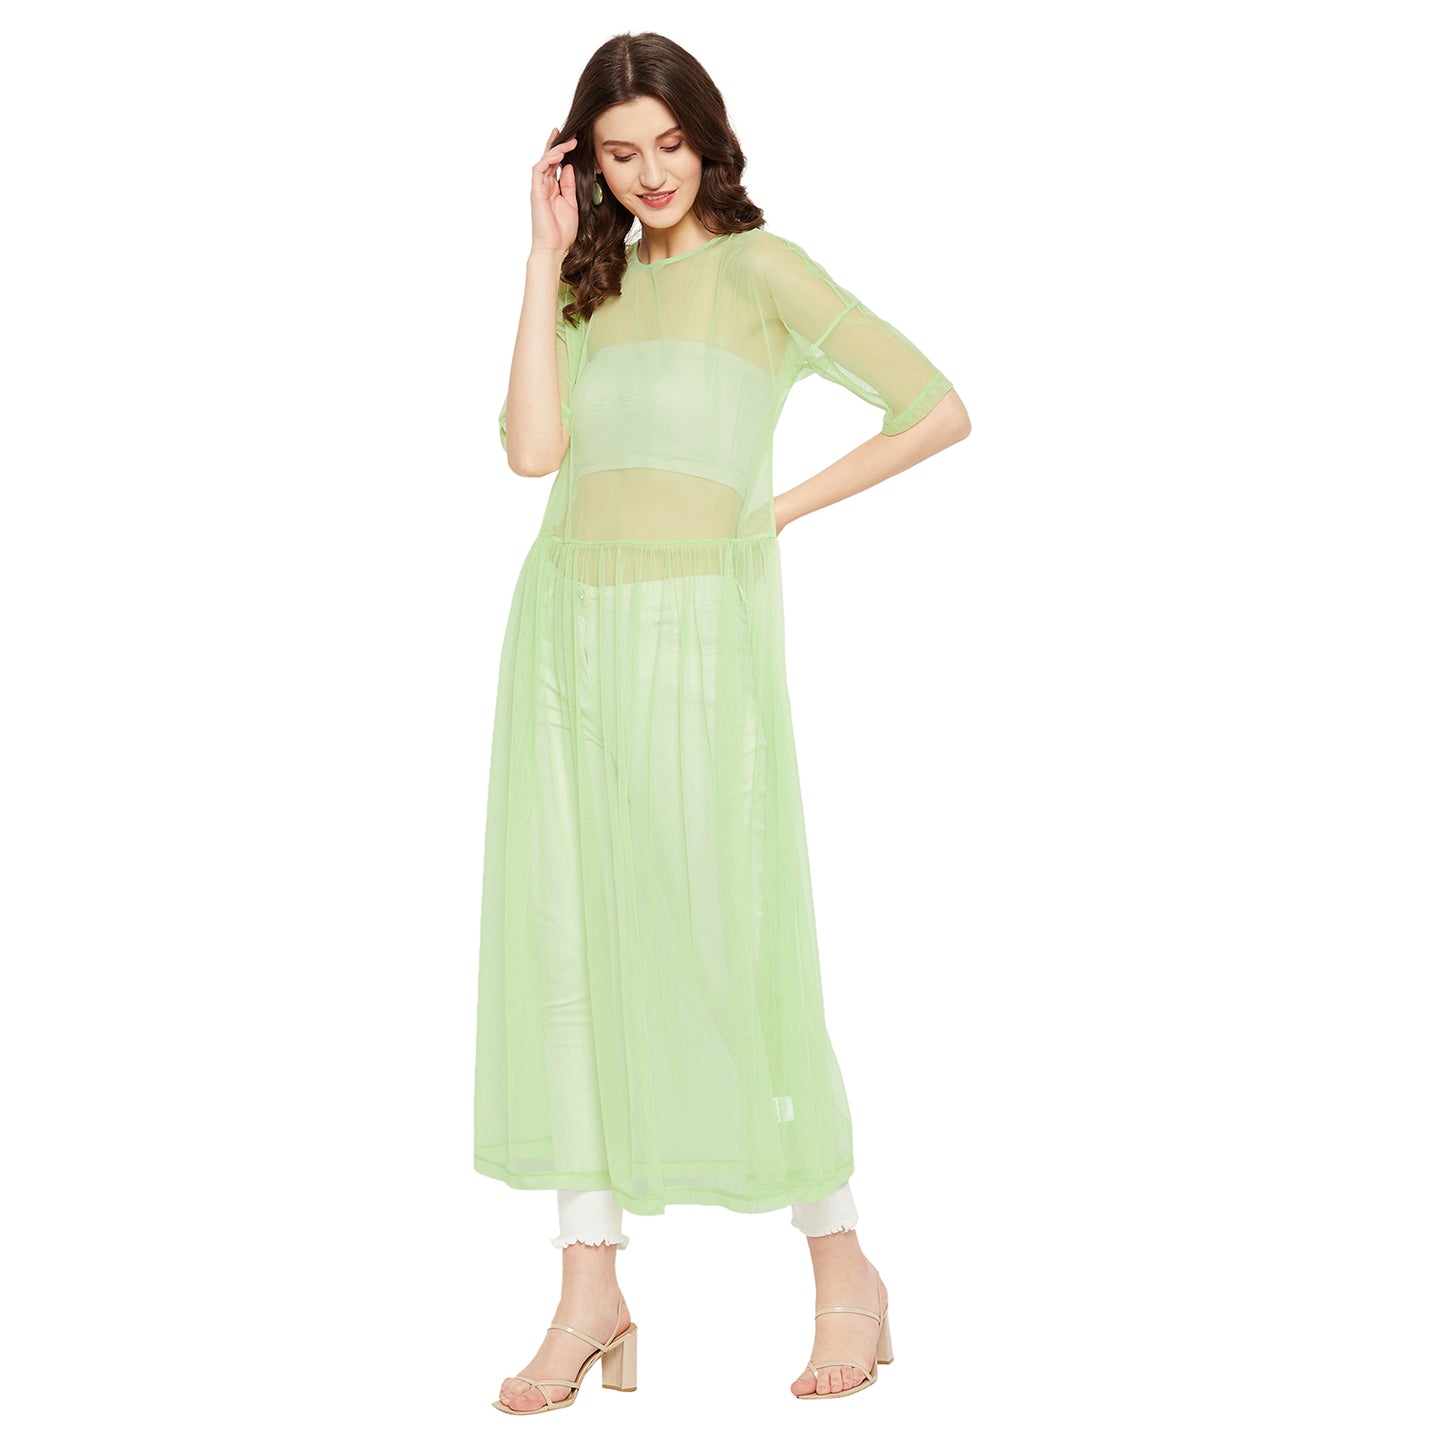 LY2 Sheer Parrot Green Tulle Dress